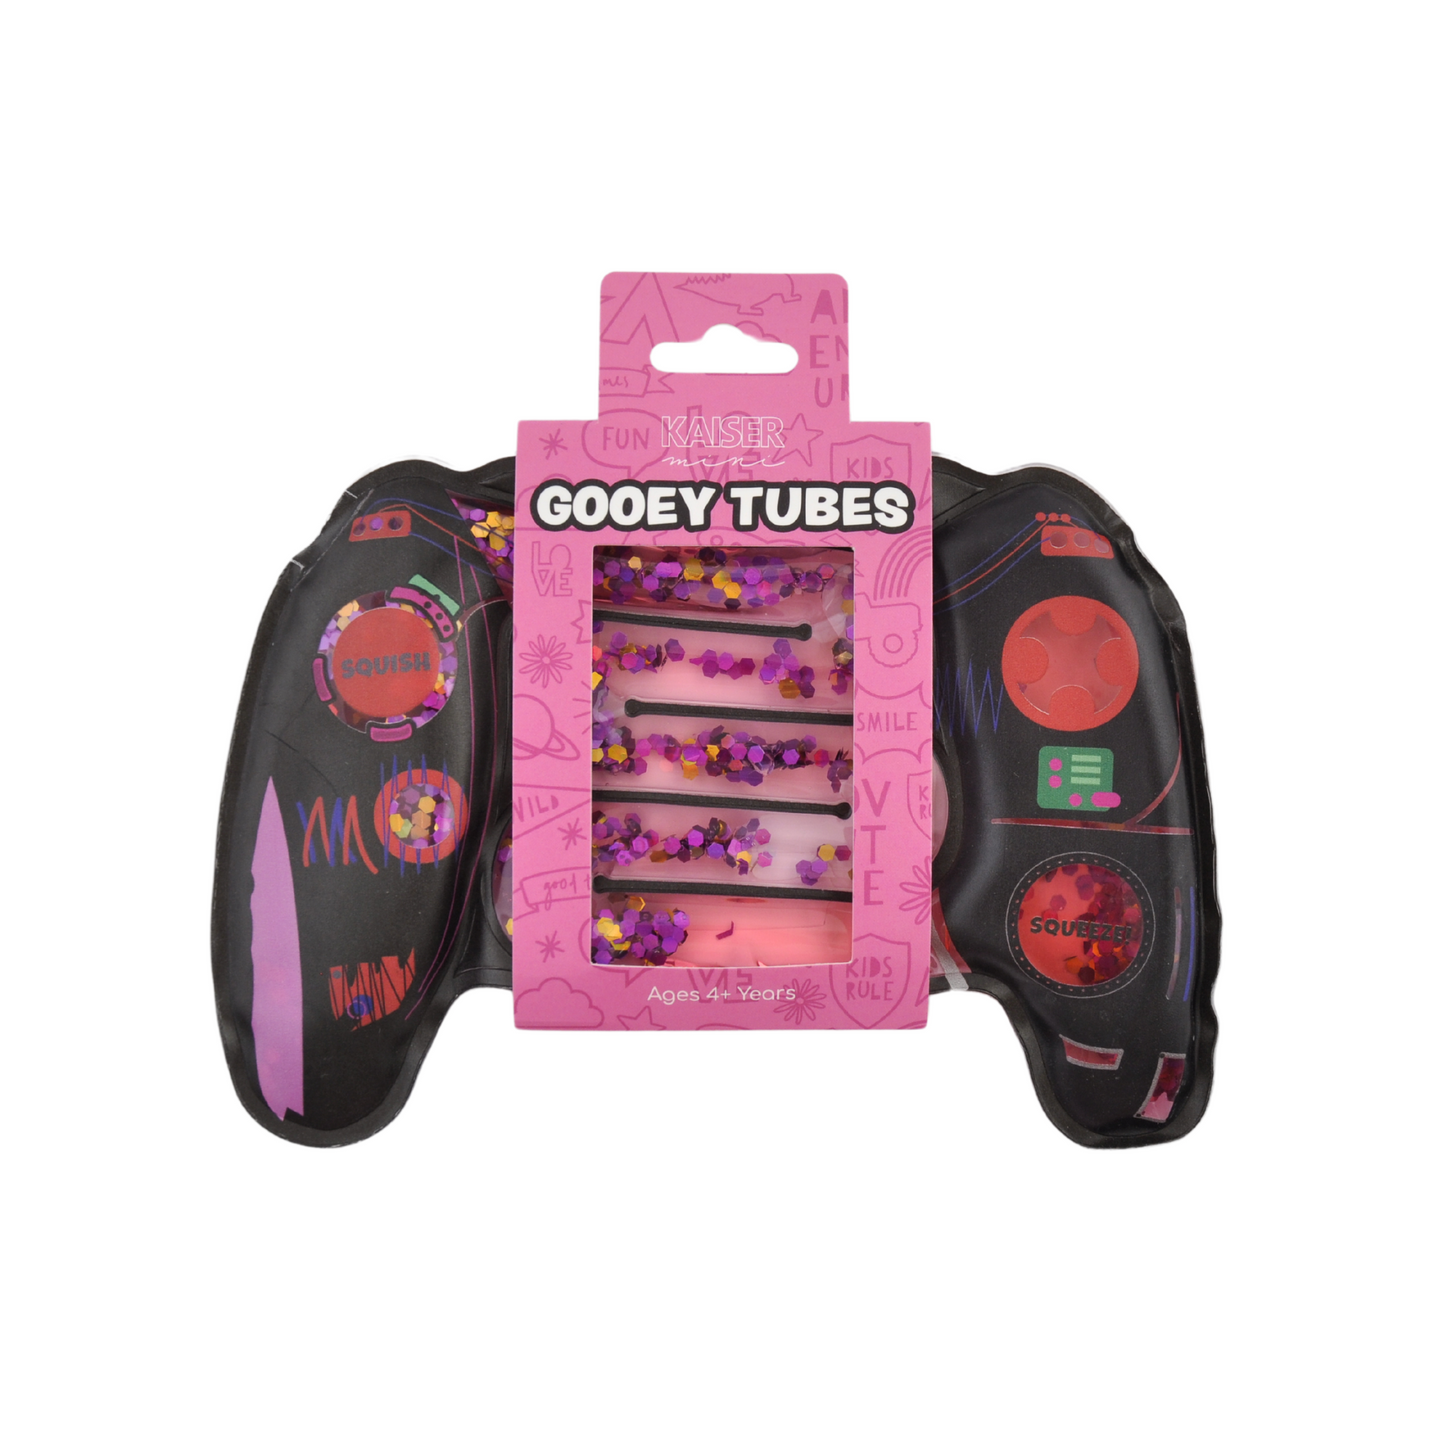 Gooey Tubes - Pink Controller